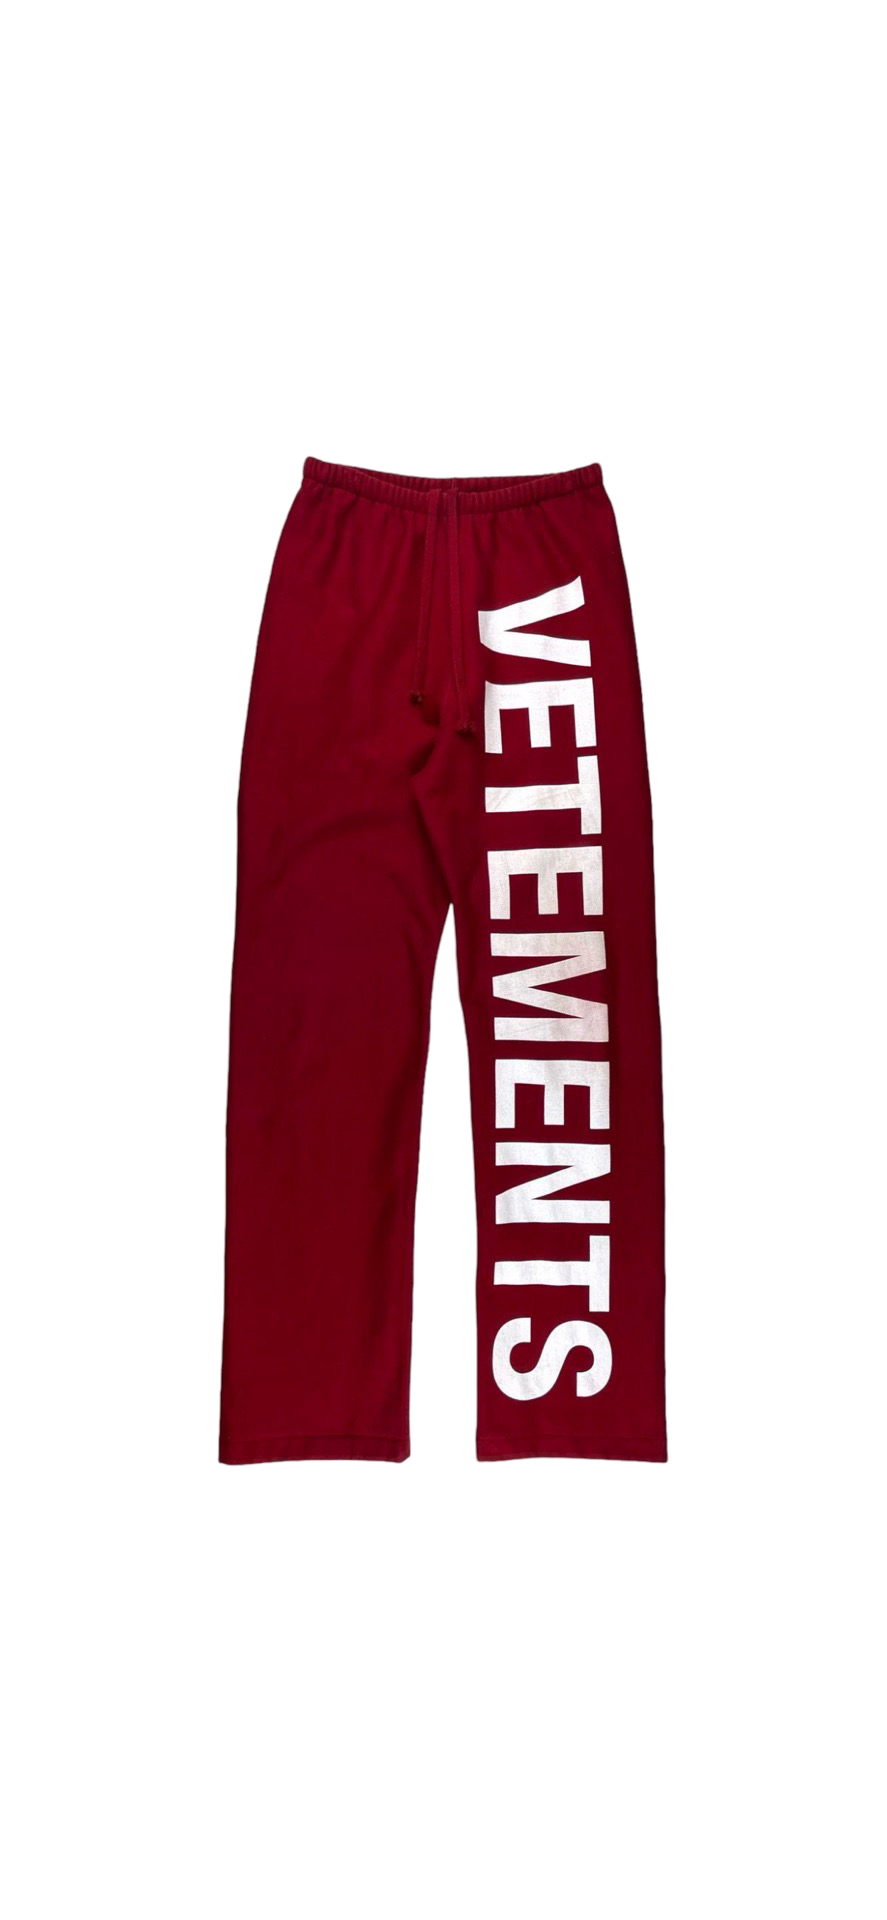 AW18 Vetements Big Logo Sweatpants